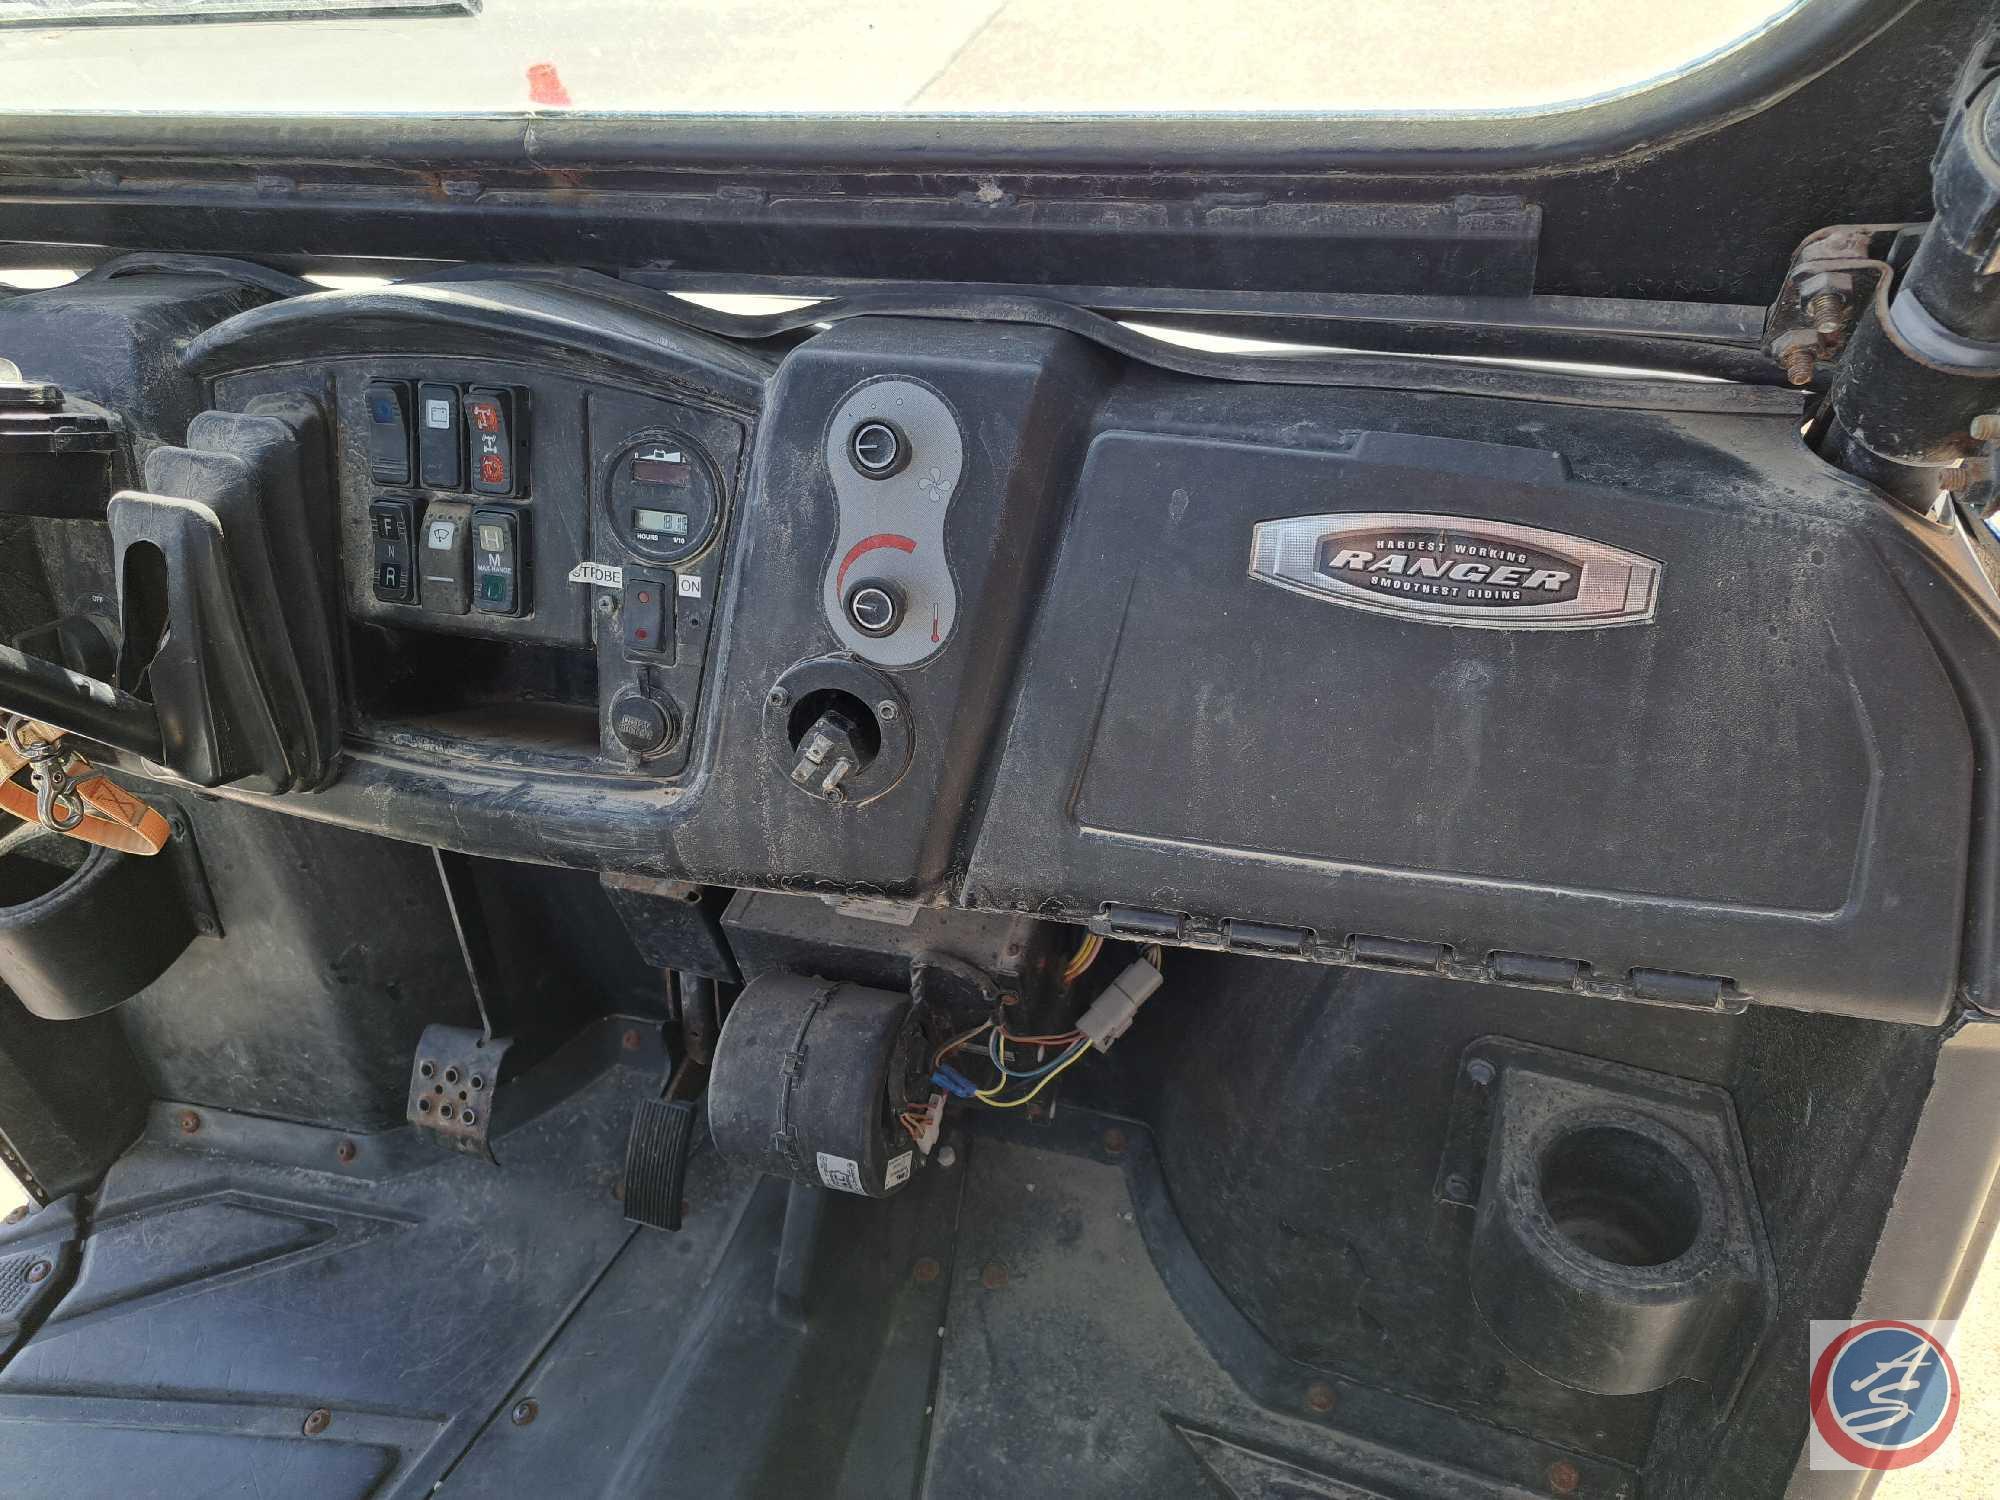 2012 Polaris Ranger EV 4x4 No Title...or MRO Dump Box Hard door Cab with Glass Heated Cab Unit was